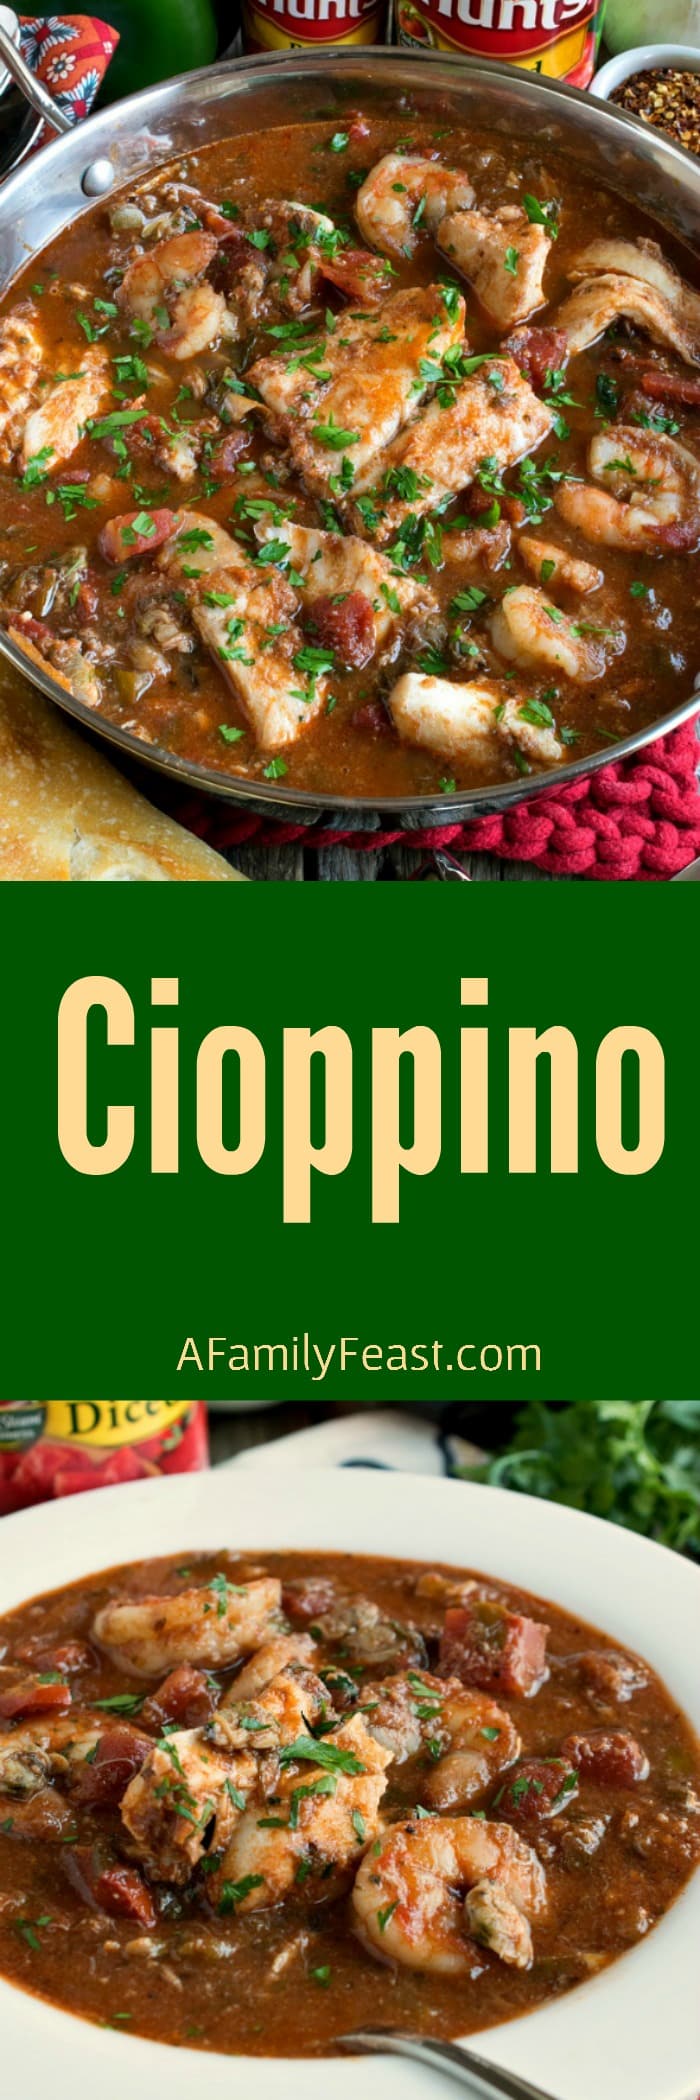 Cioppino - A classic Italian, tomato-based 